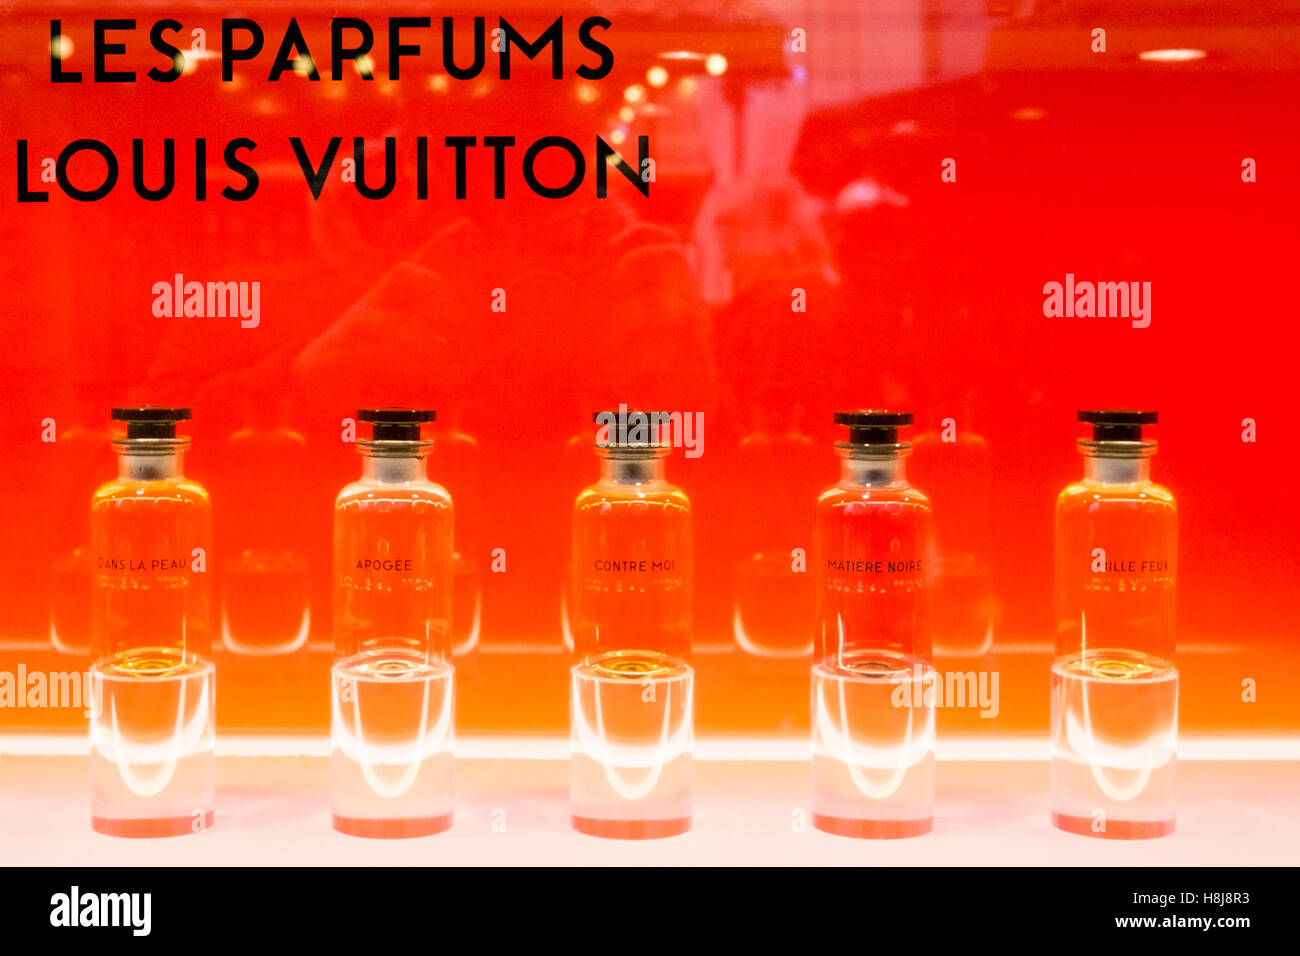 Les Parfums 'Louis Vuitton' Christmas shop window display, Manchester, UK  Stock Photo - Alamy